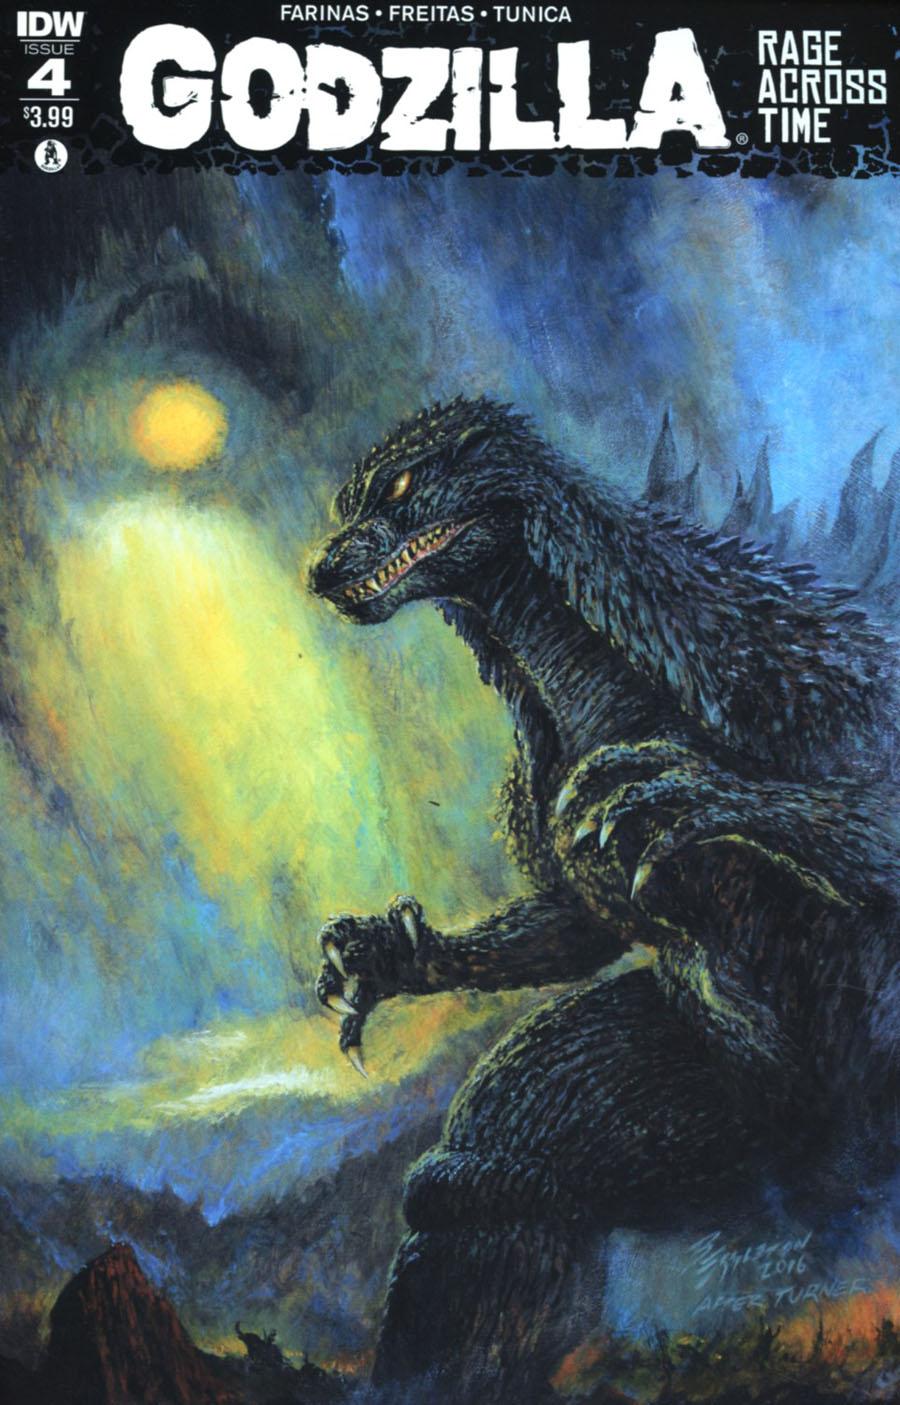 Godzilla Rage Across Time Vol. 1 #4